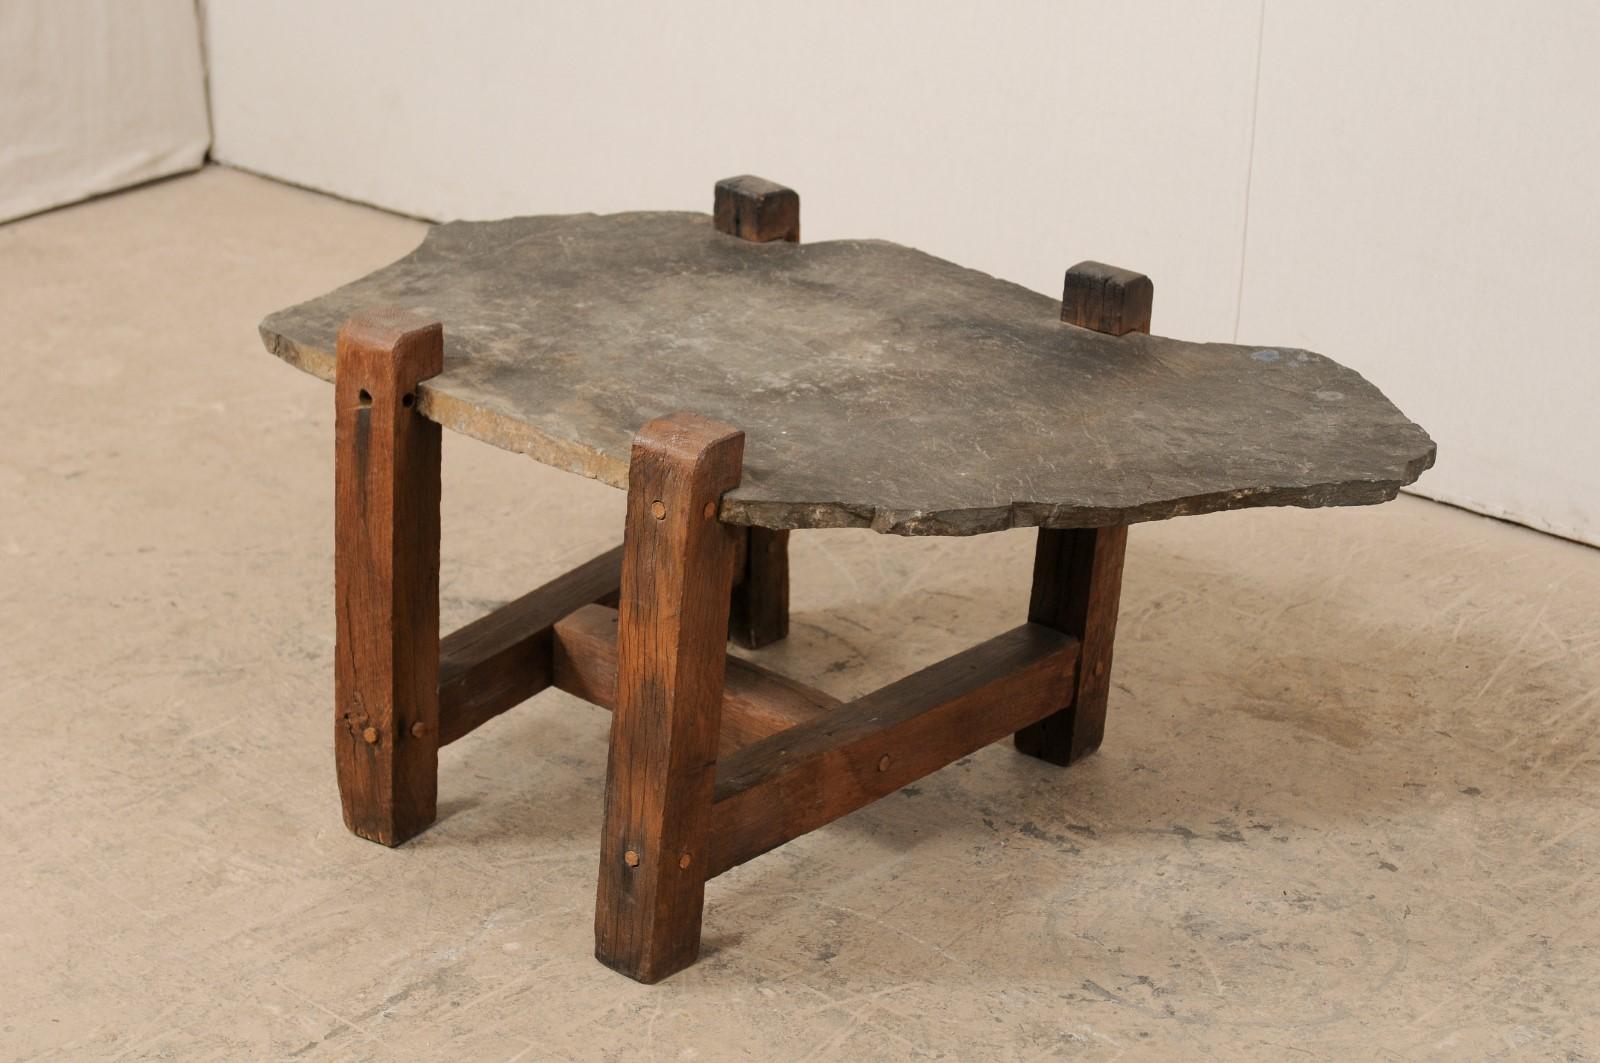 20th Century Organic-Shaped Slate Top Coffee Table on Wood Base